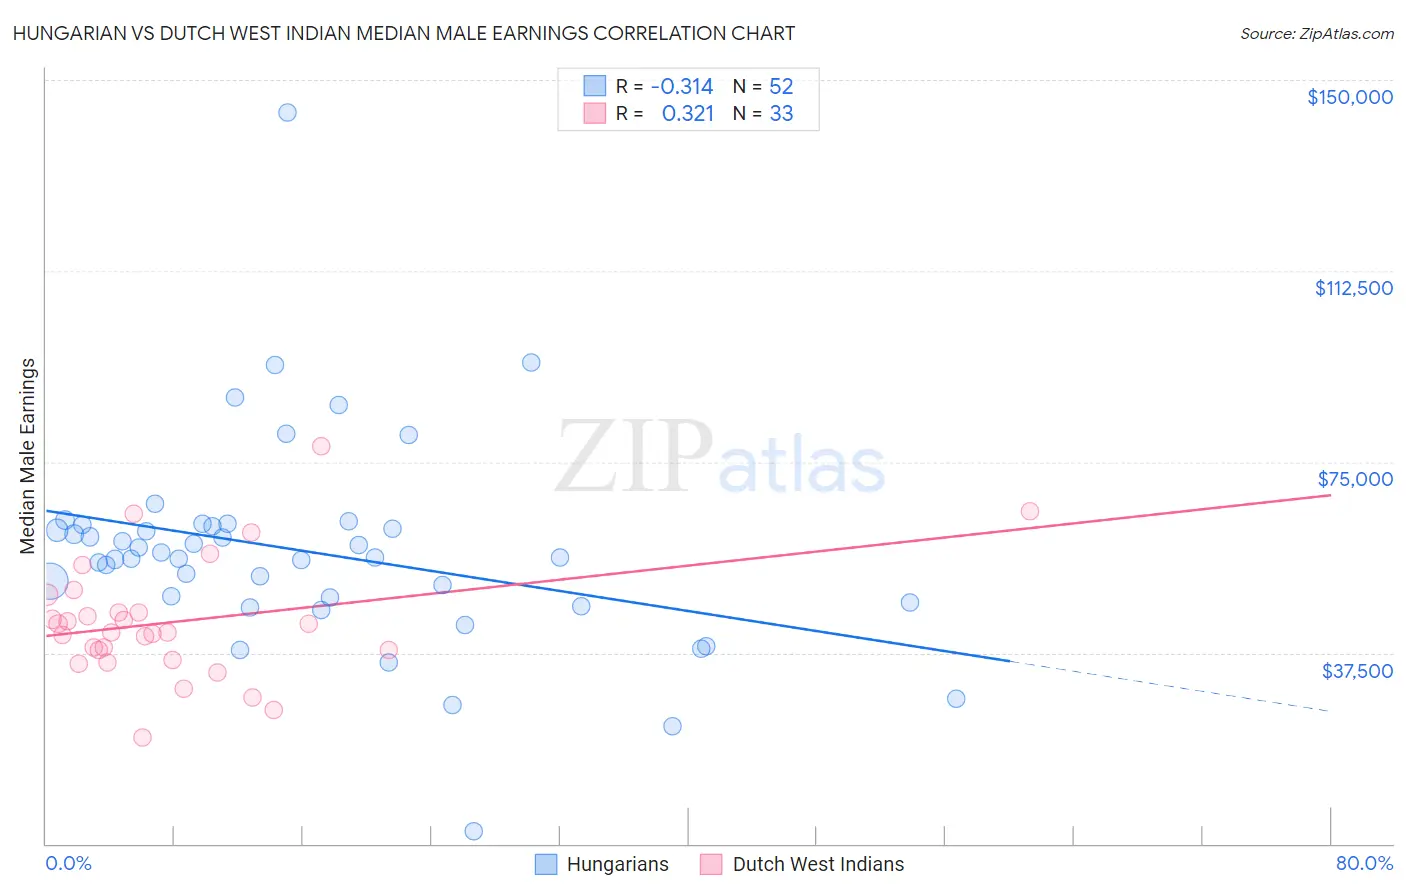 Hungarian vs Dutch West Indian Median Male Earnings